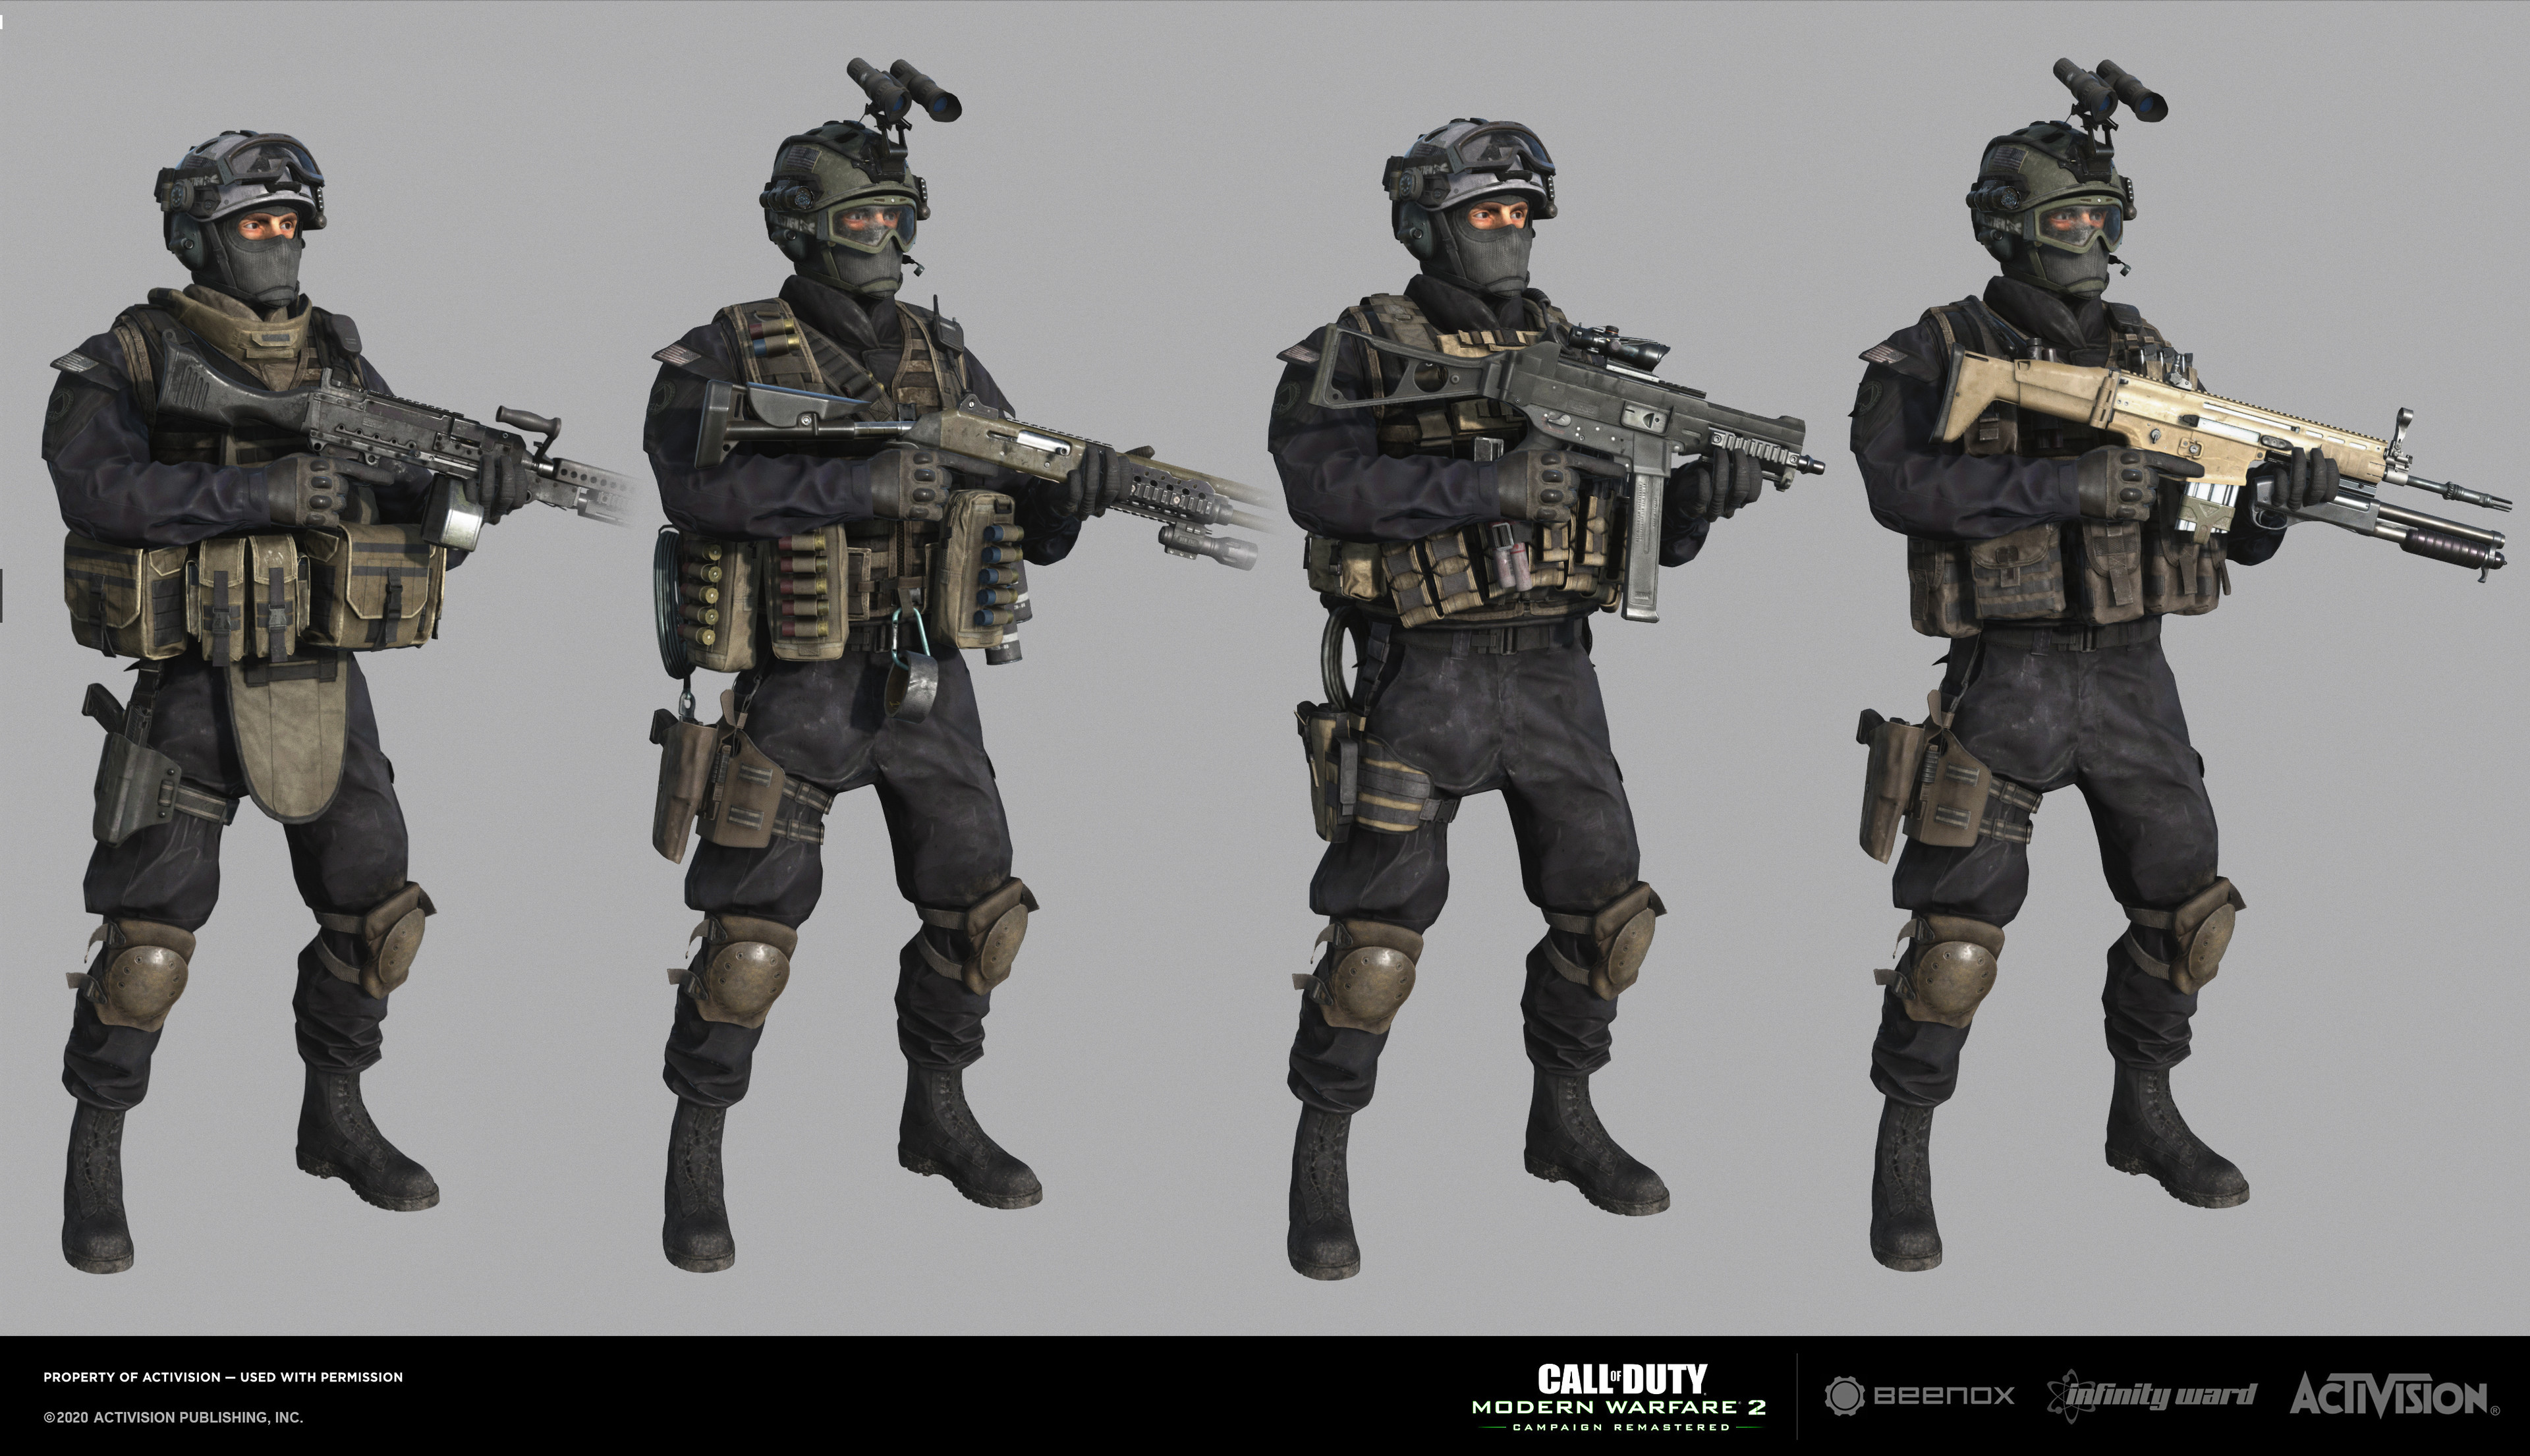 ArtStation - Call of Duty - Modern Warfare 2 Campaign Remastered - Shadow  Company